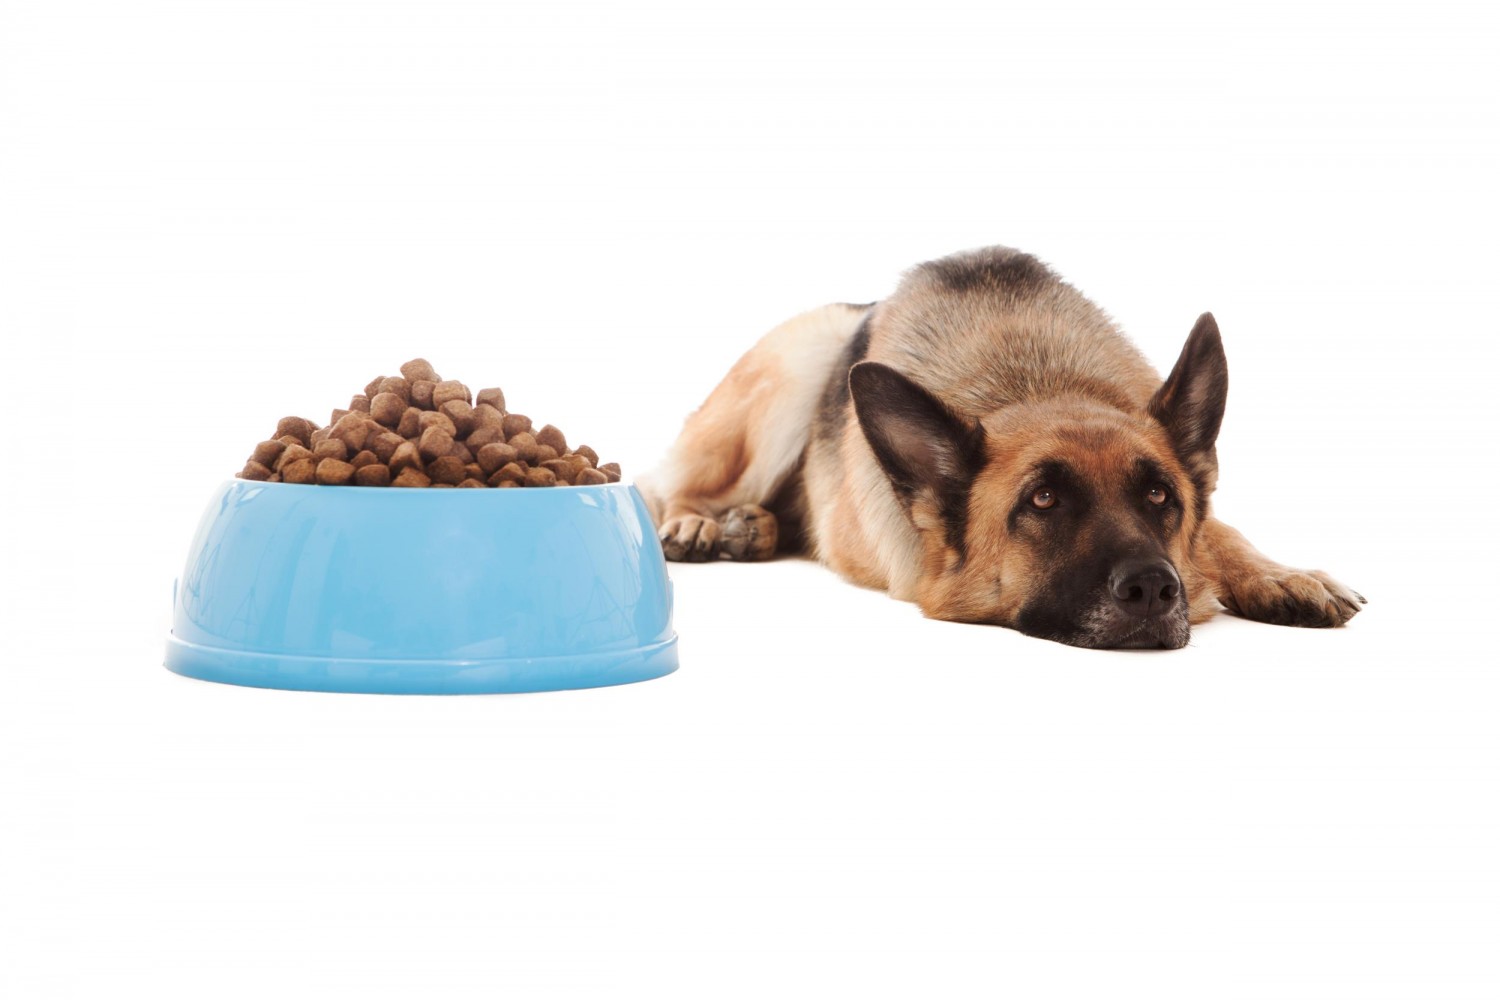 Dog with Food Bowl